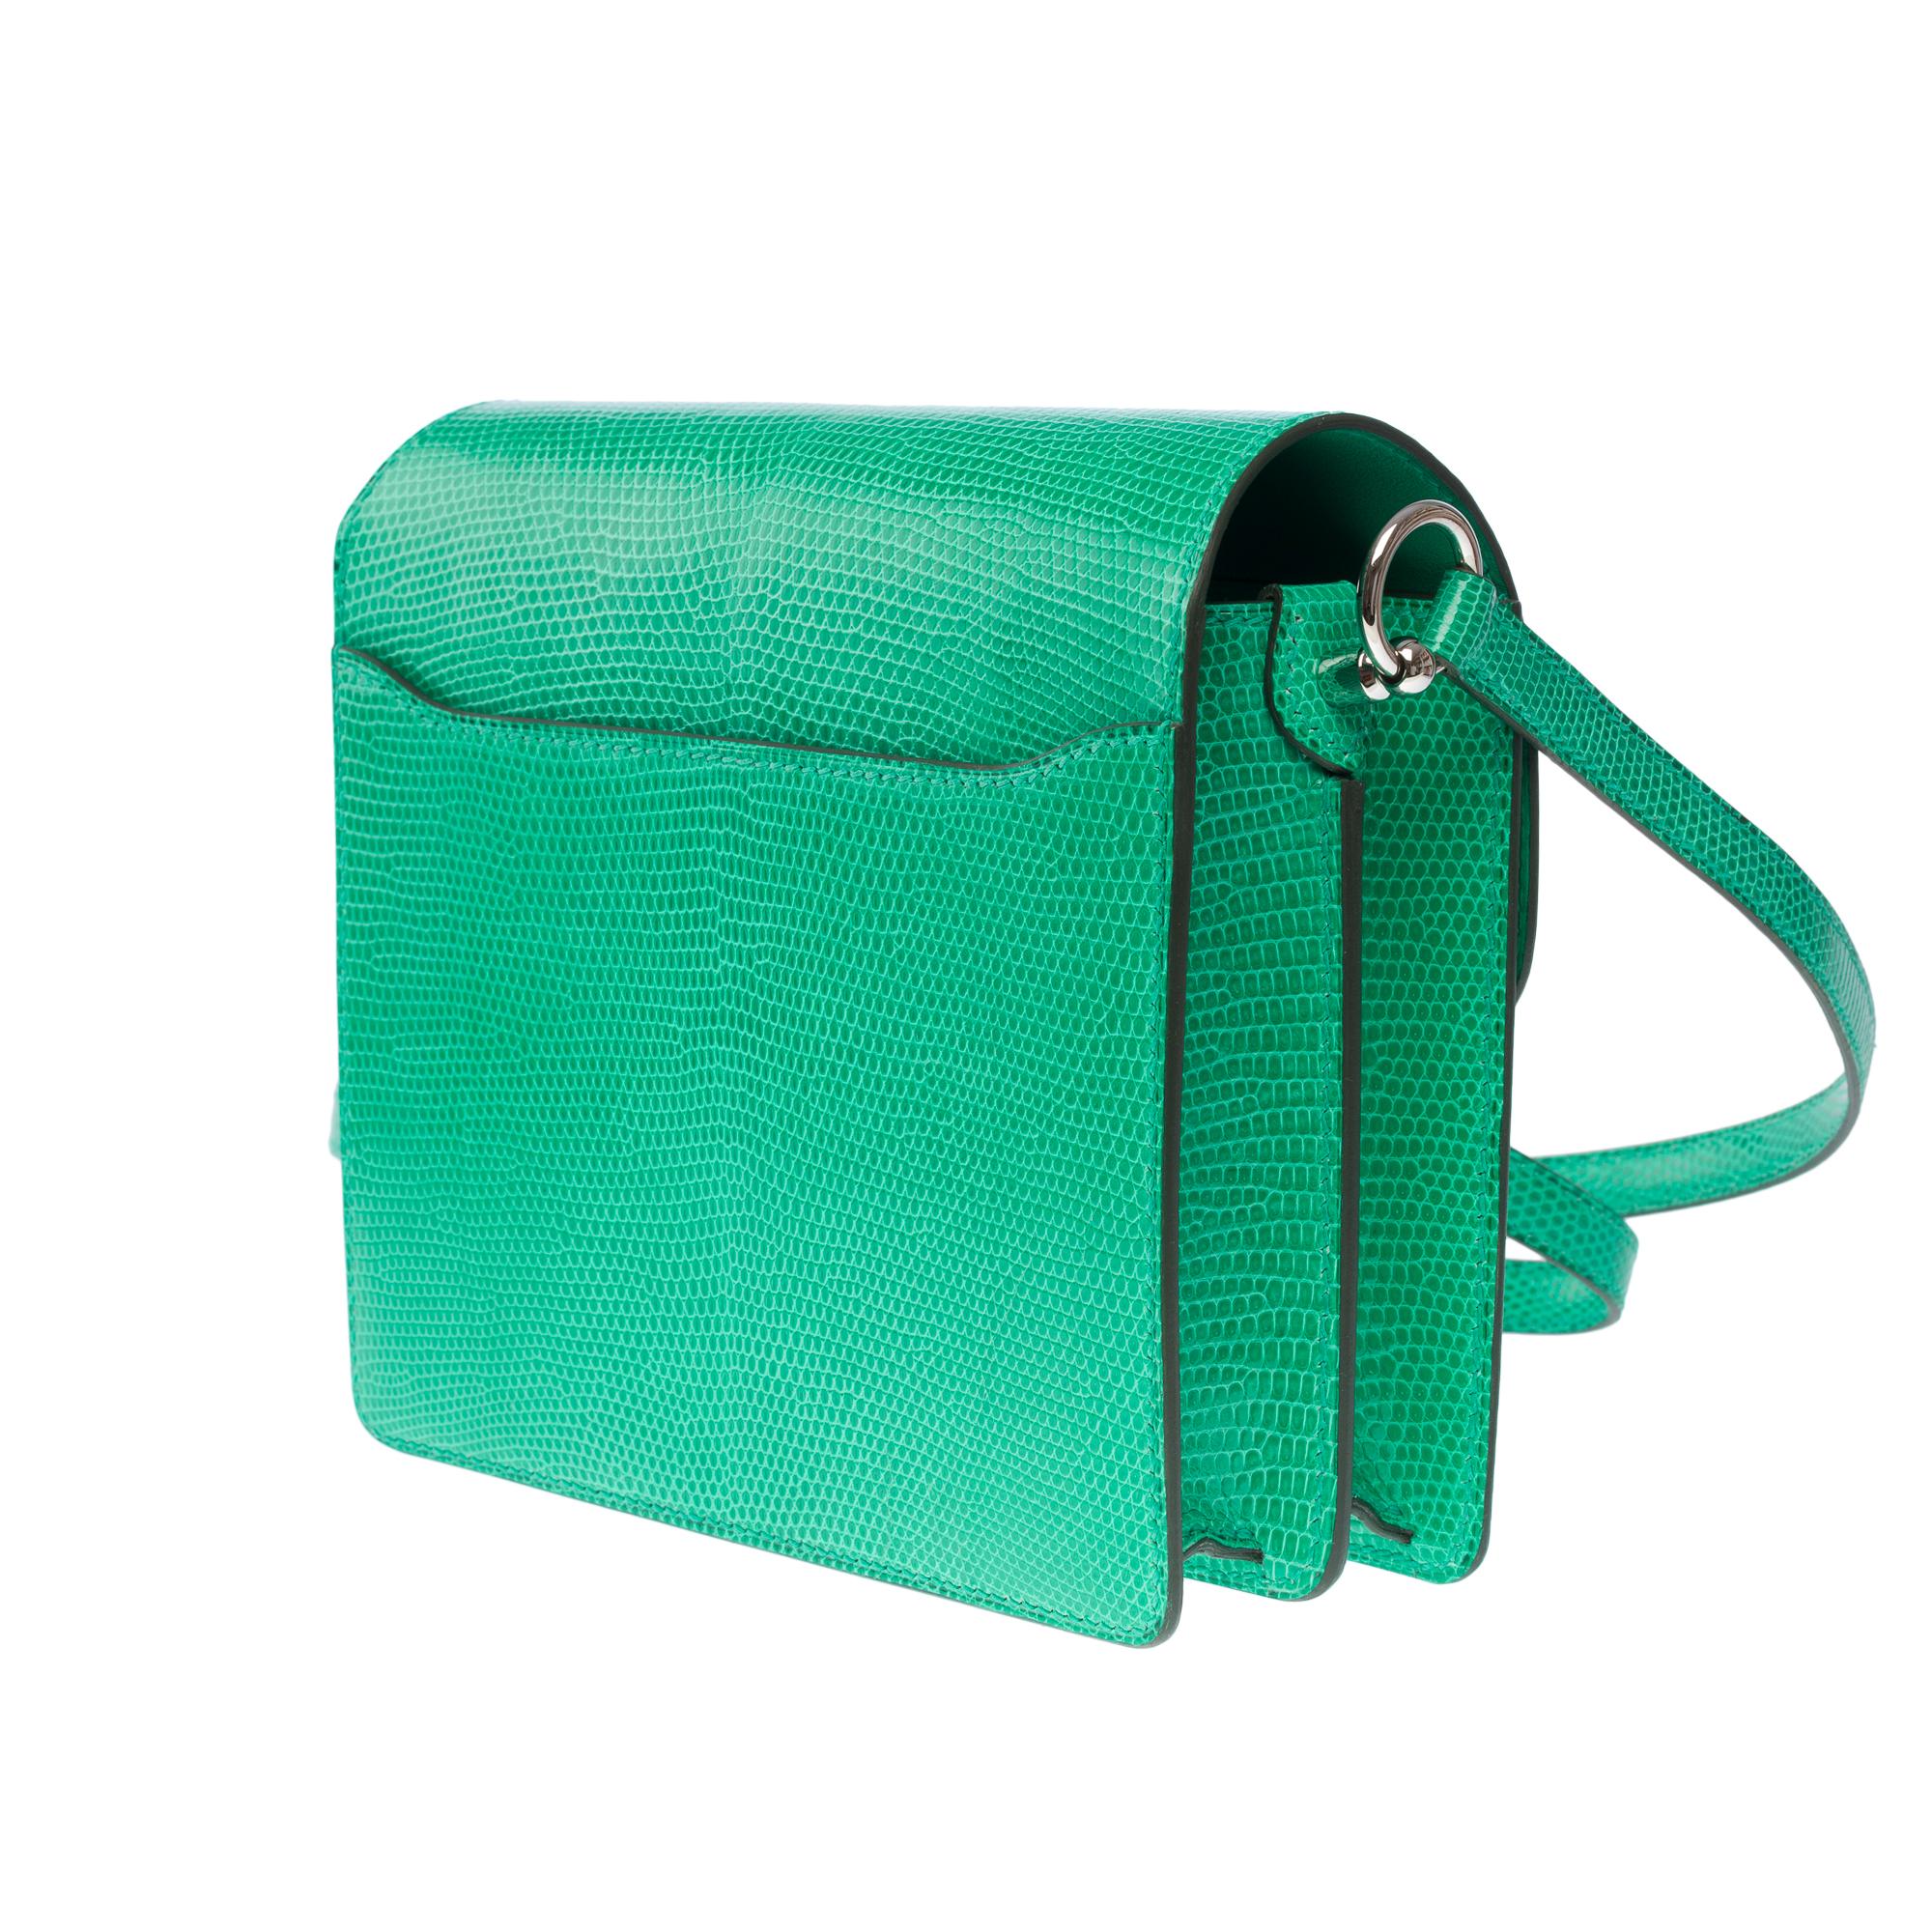 New Amazing Hermès Roulis 18 shoulder bag in mint green lizard, SHW For Sale 2